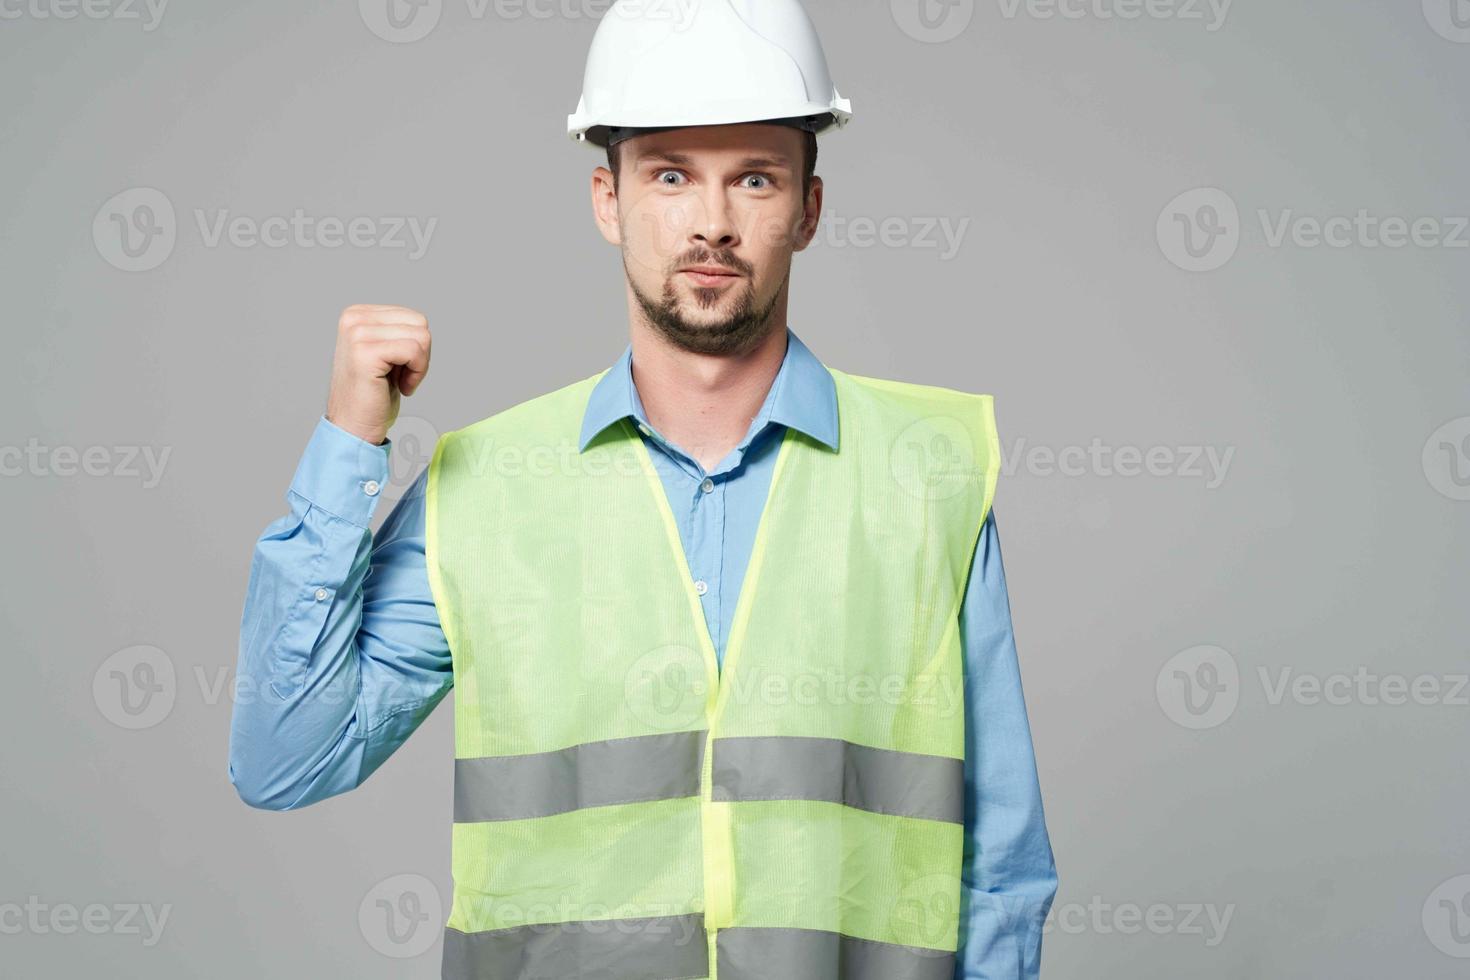 man reflective vest Professional Job light background photo